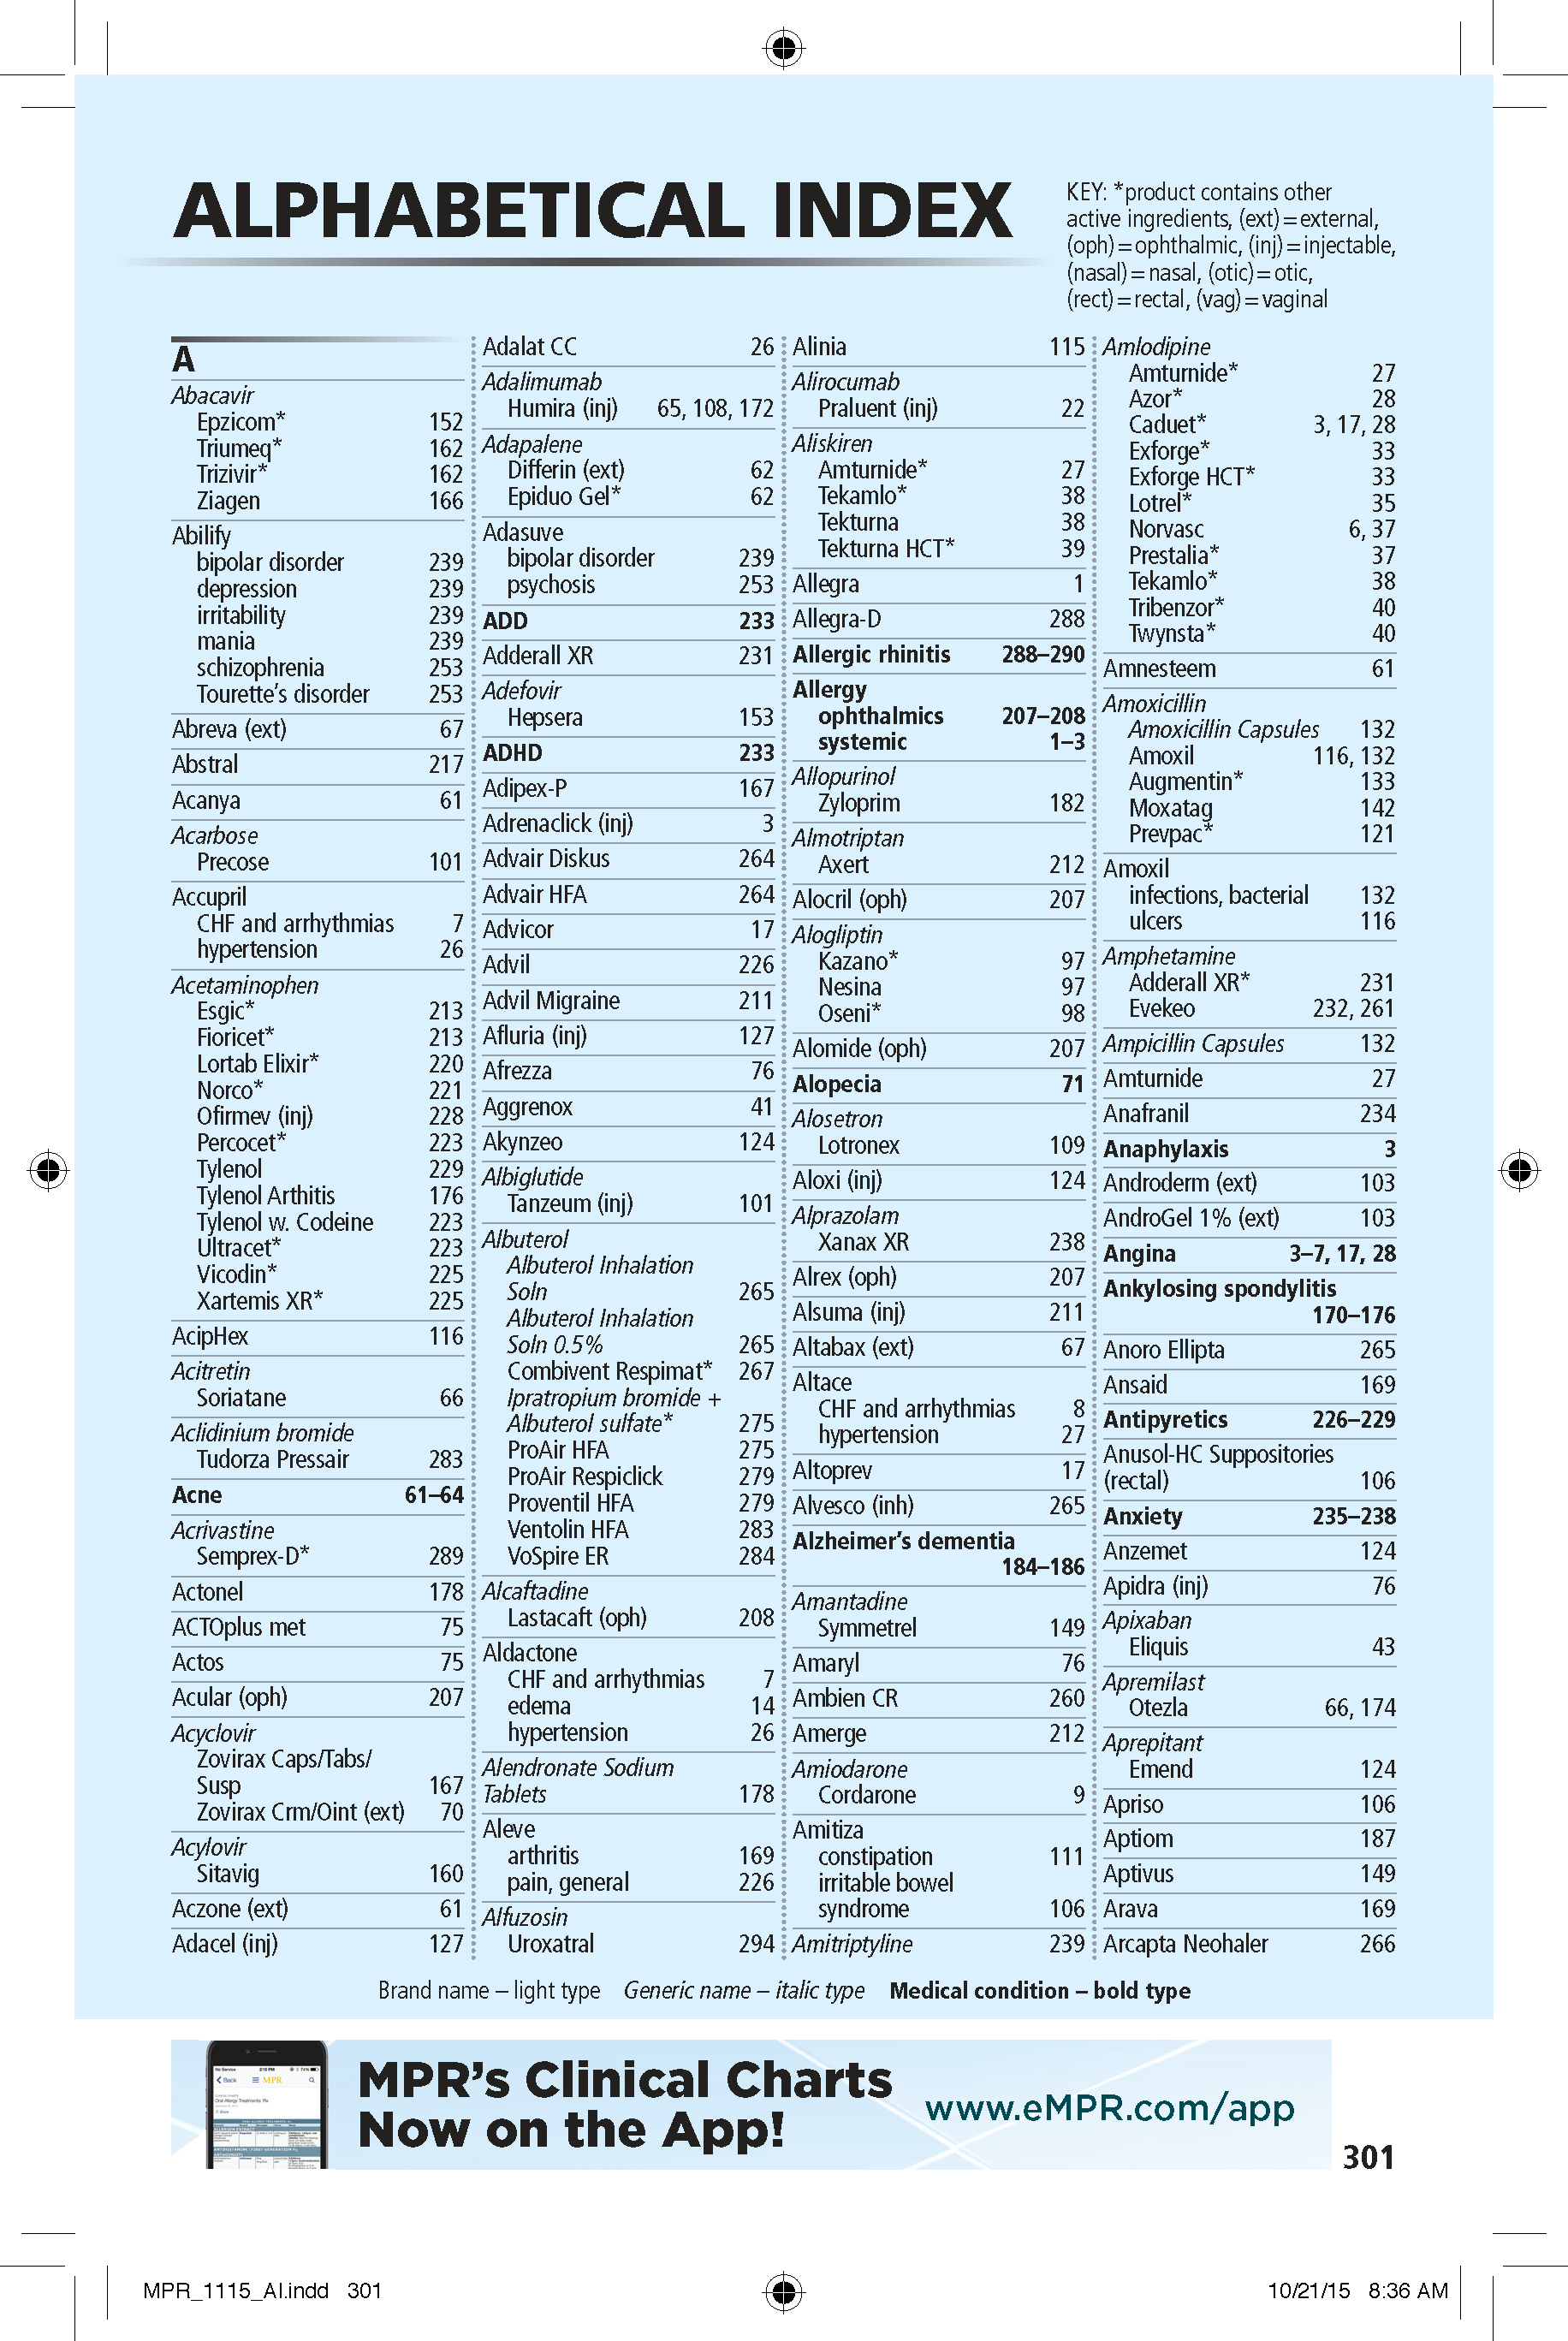 PRI alphabetical index page 301 Nov. 2015